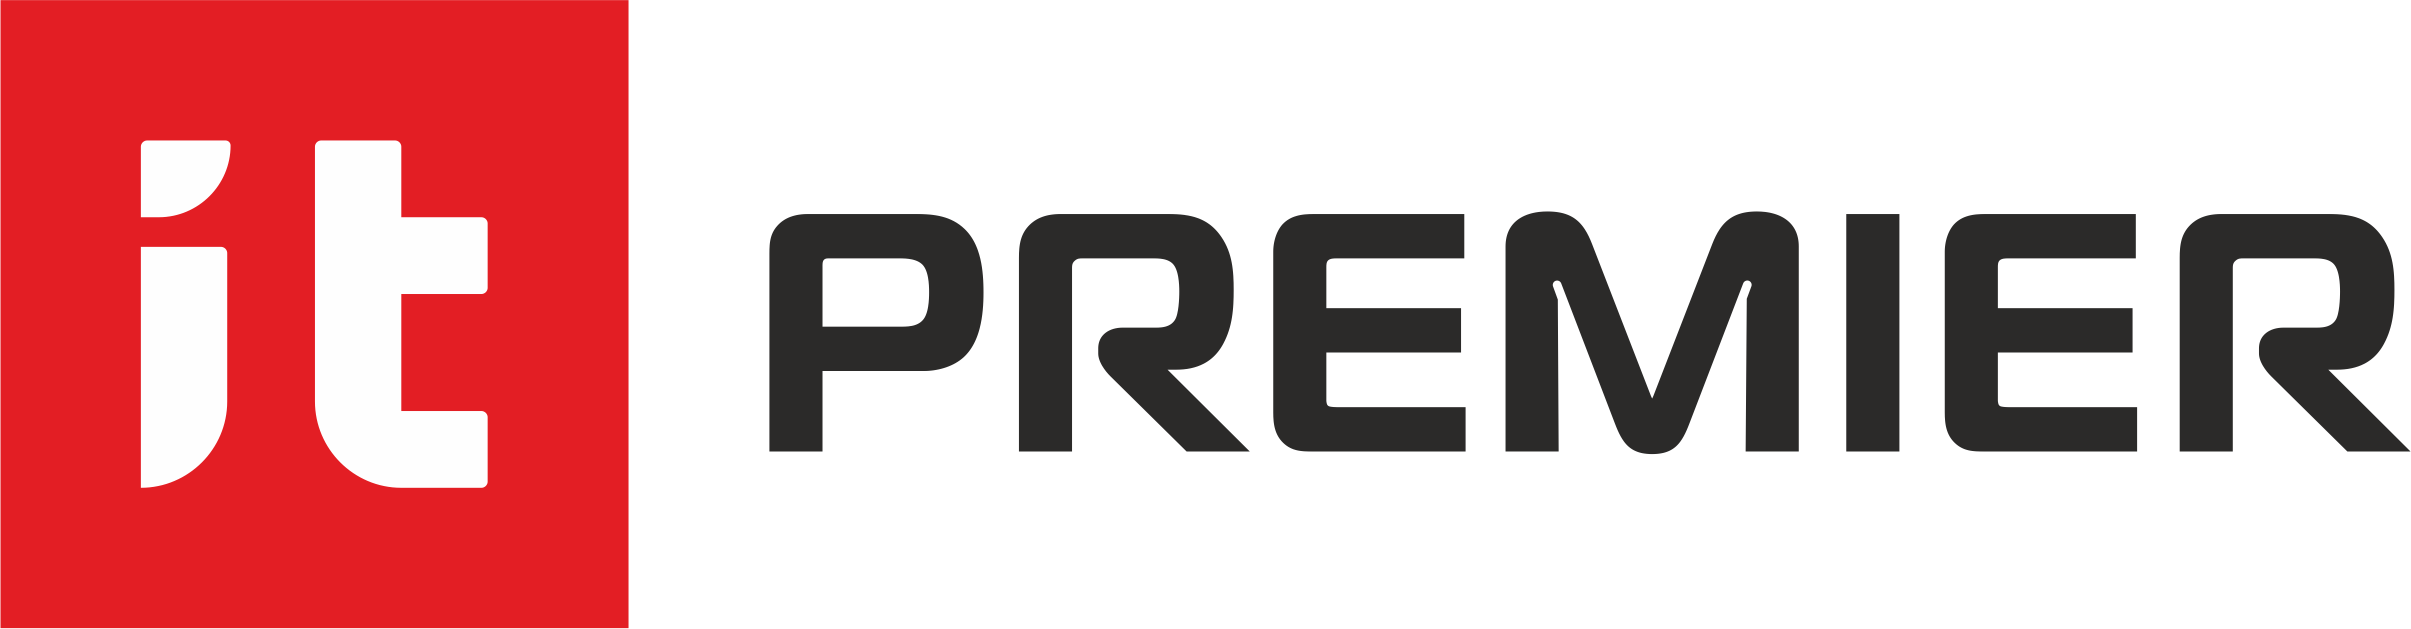 Premier logo png